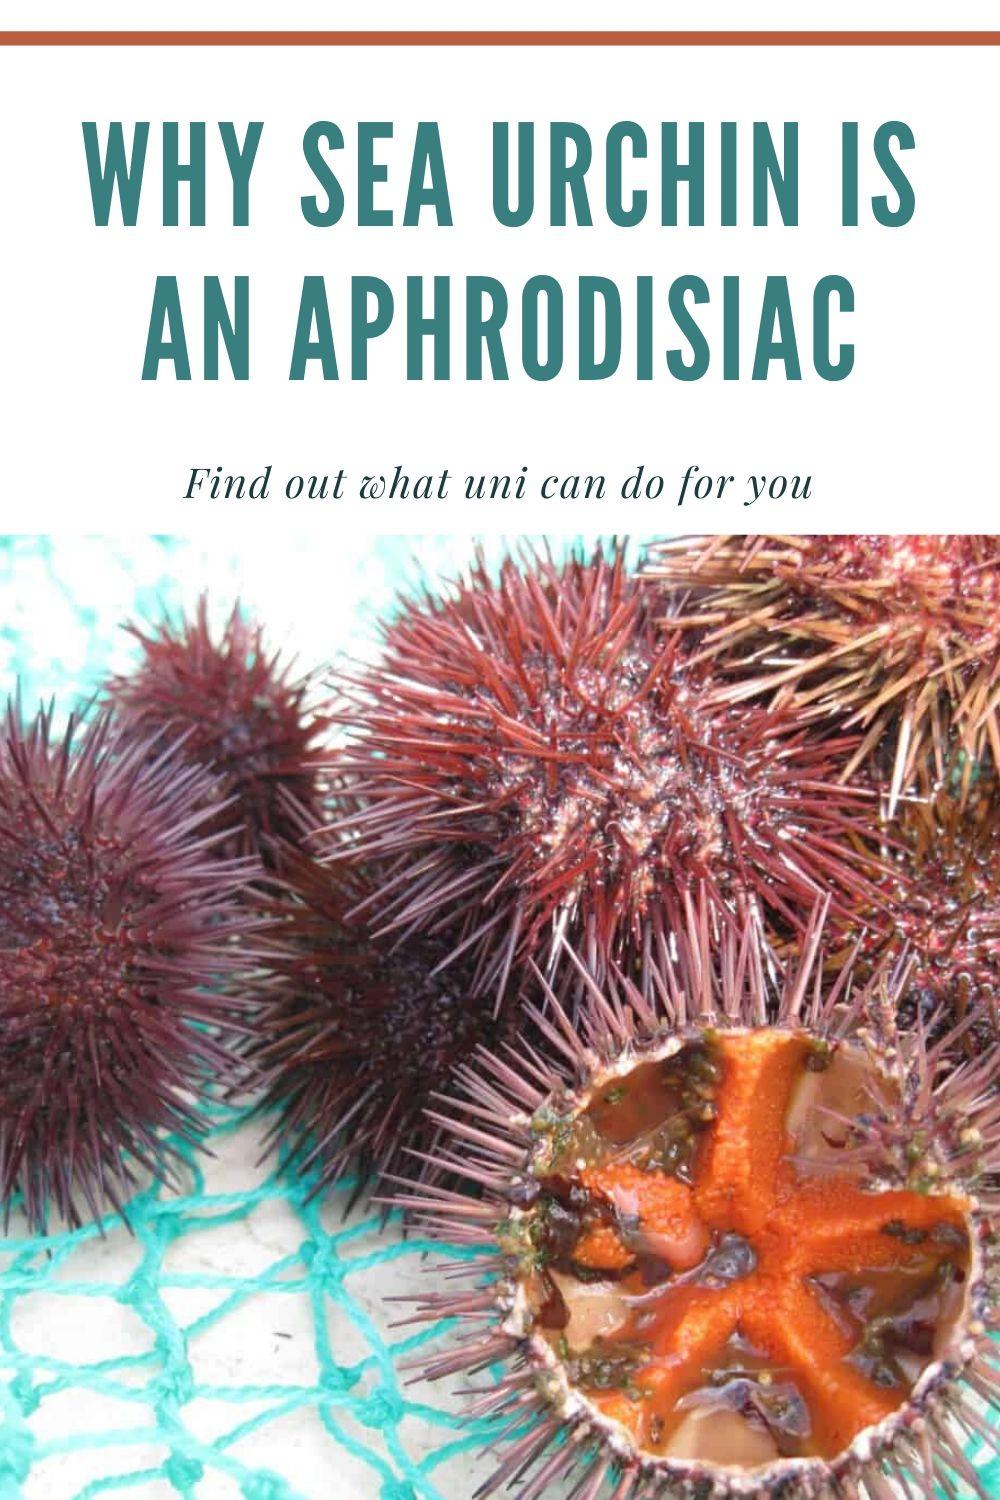 Why sea urchin is an aphrodisiac